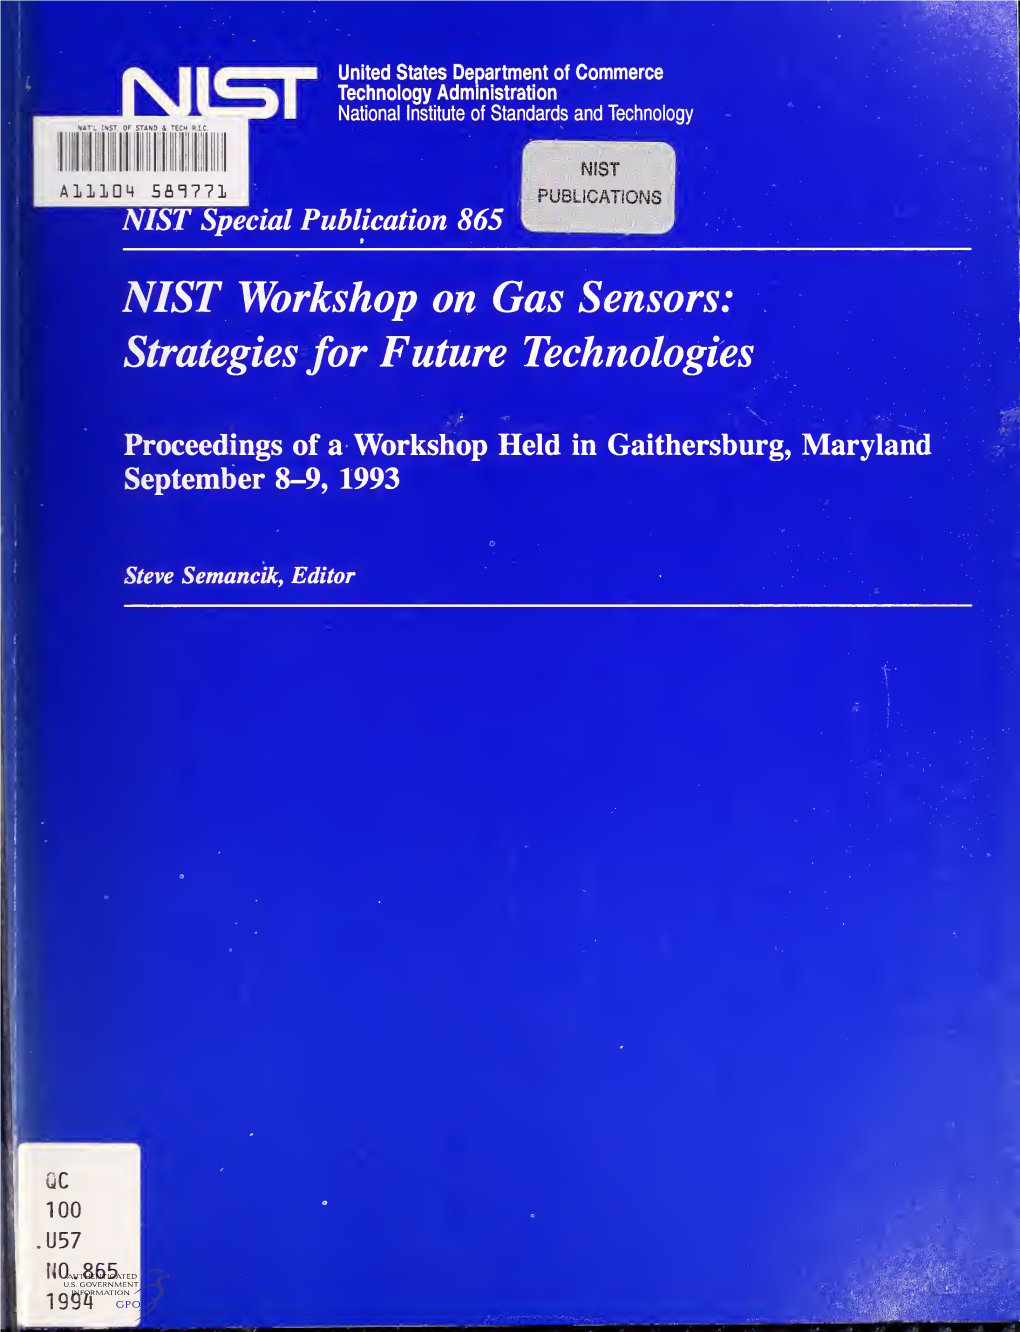 NIST Workshop on Gas Sensors: Strategies for Future Technologies